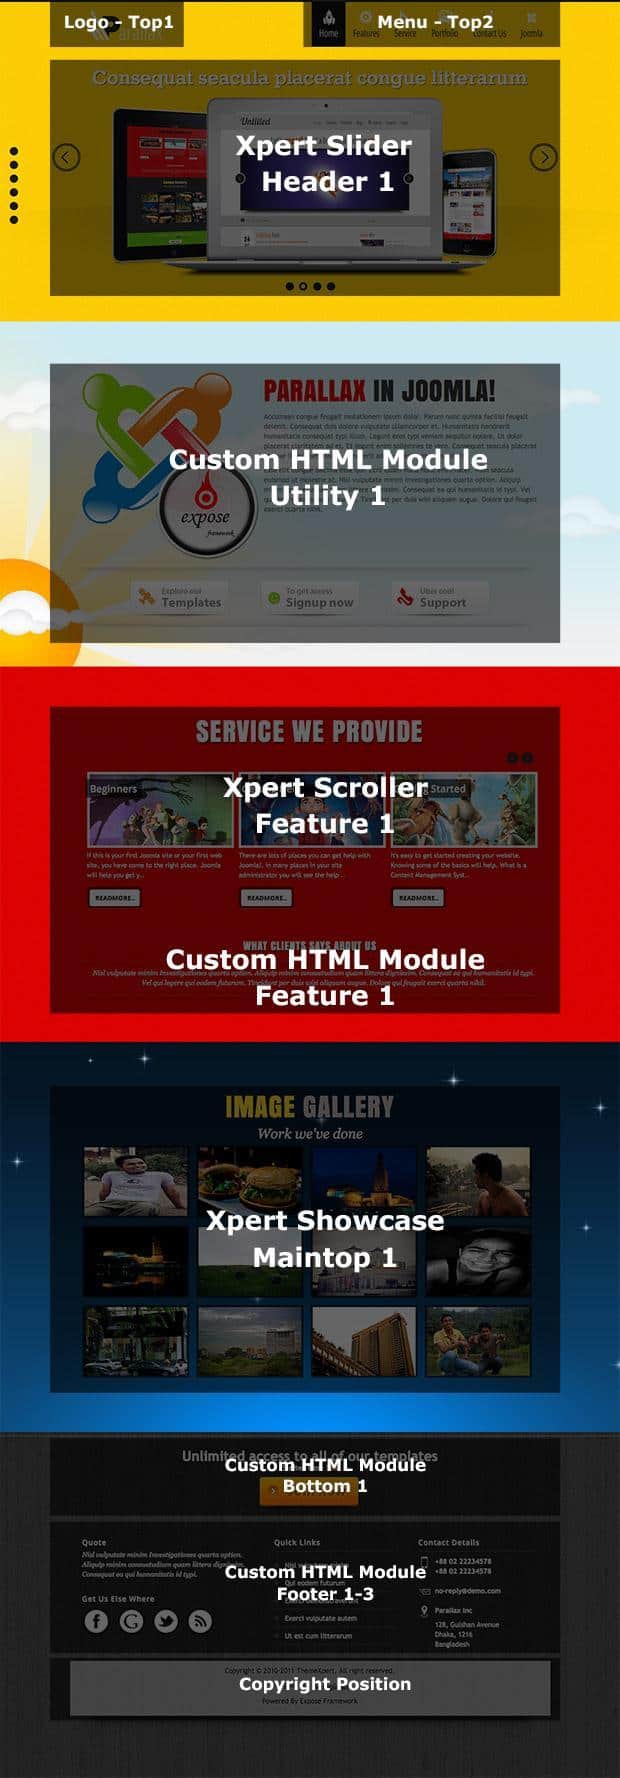 Parallax homepage